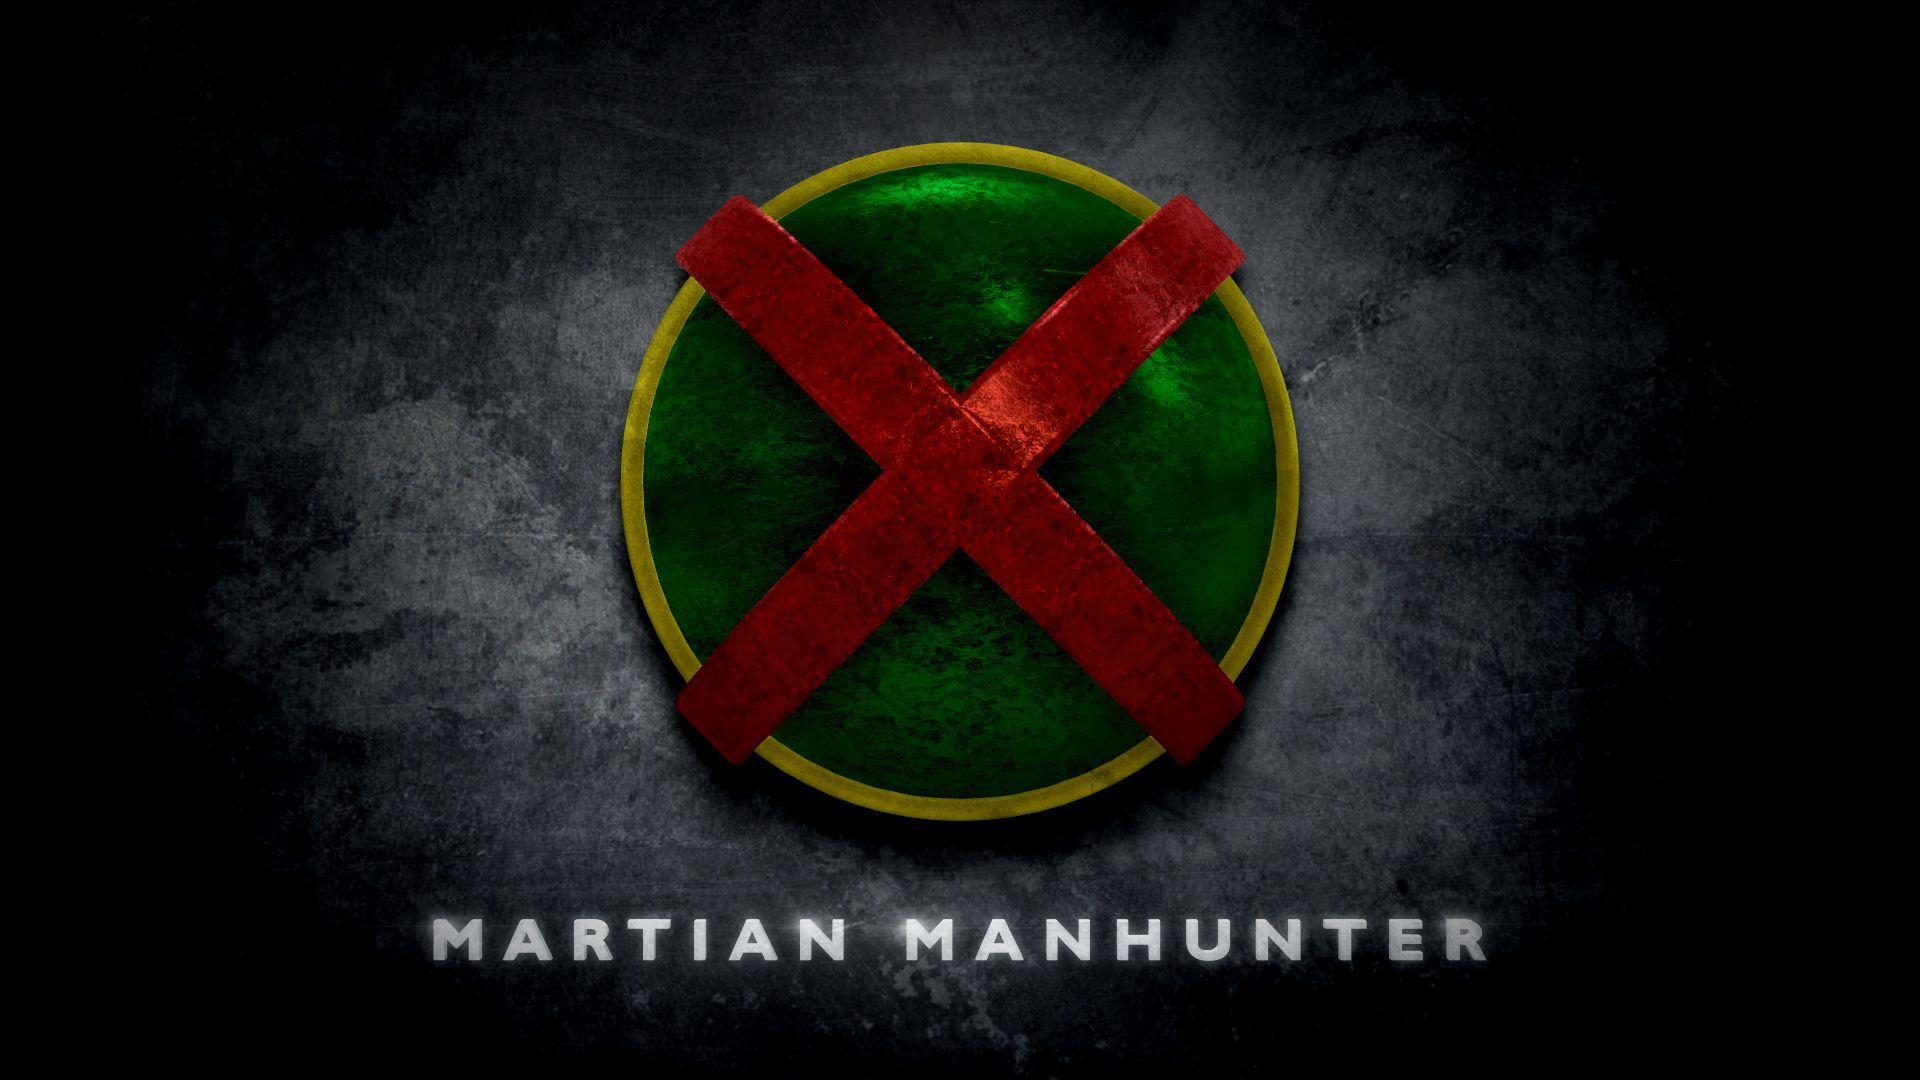 Martian Manhunter Logo - Martian Manhunter stylized logo, version 2 | DC Universe Logos ...